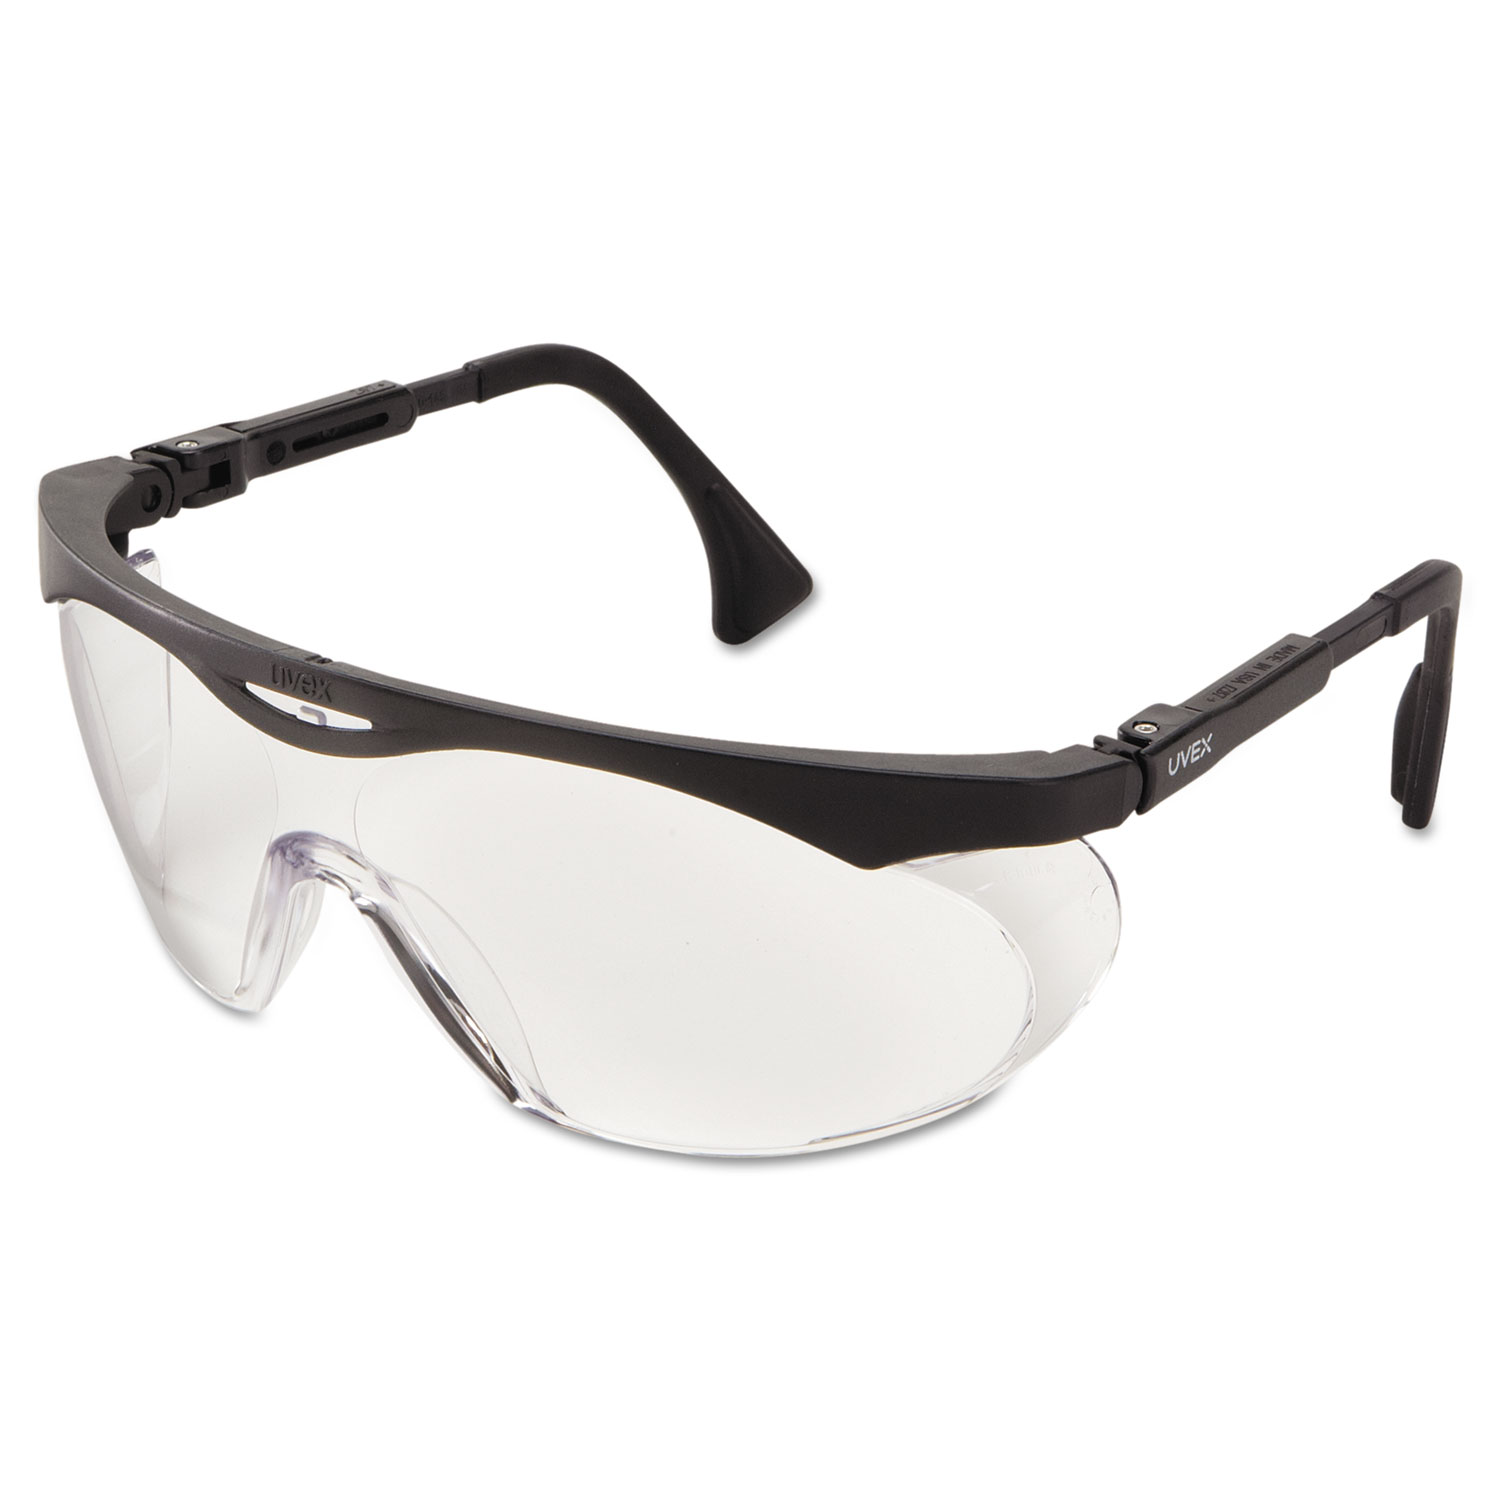 Skyper Safety Spectacles, Black Frame